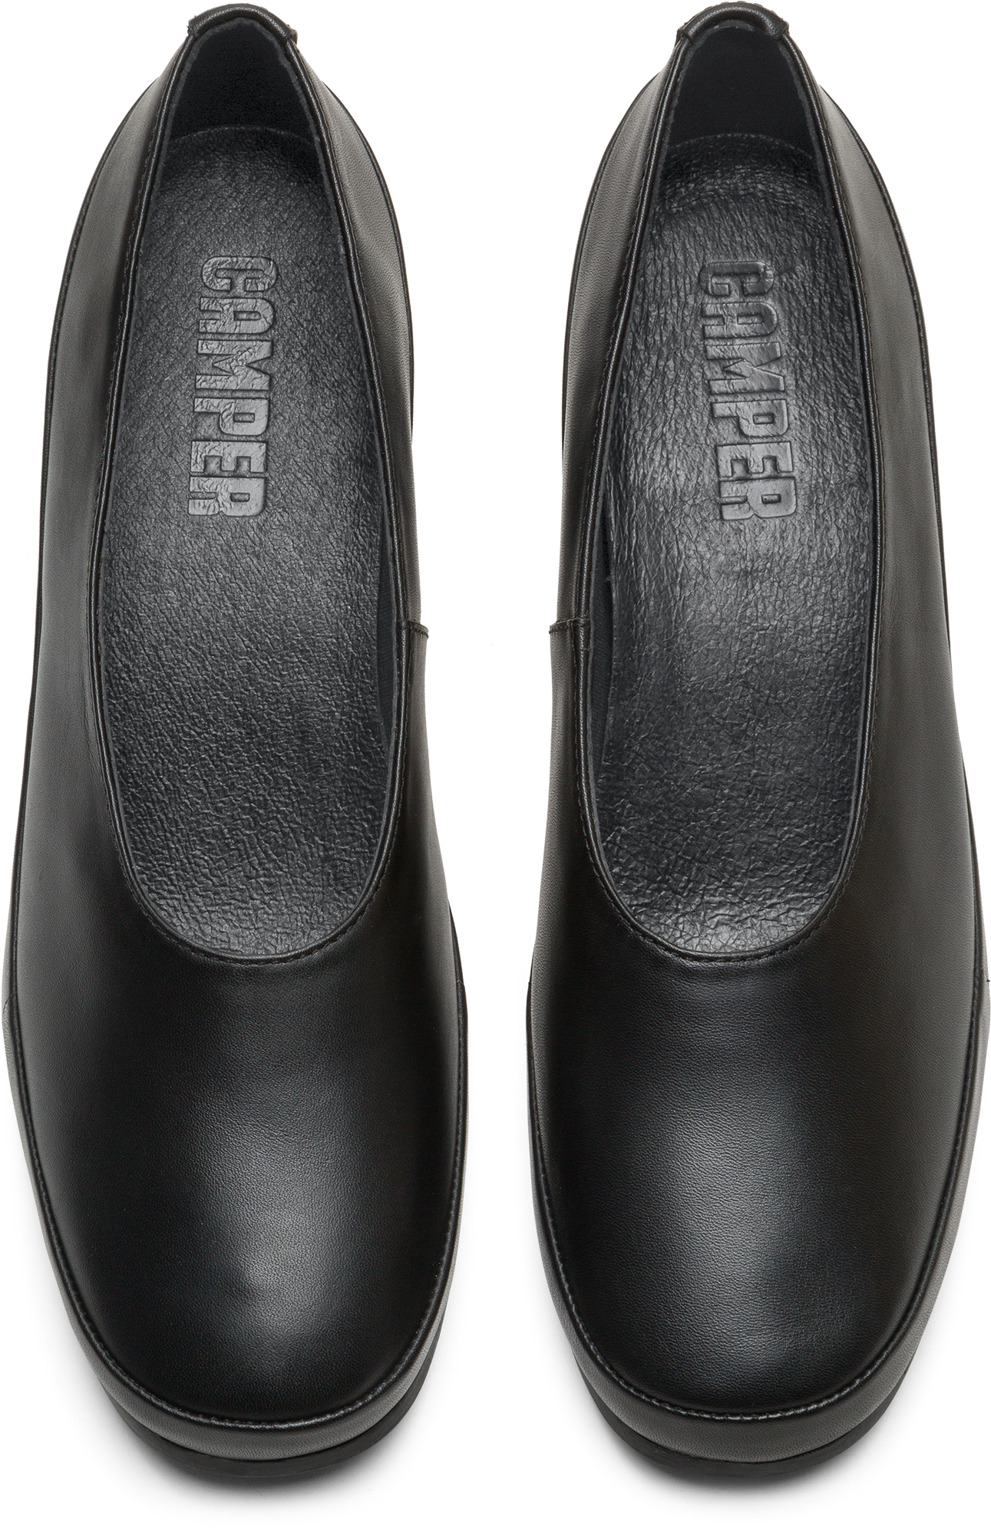 Upright Black Formal Shoes for Women - Camper Shoes